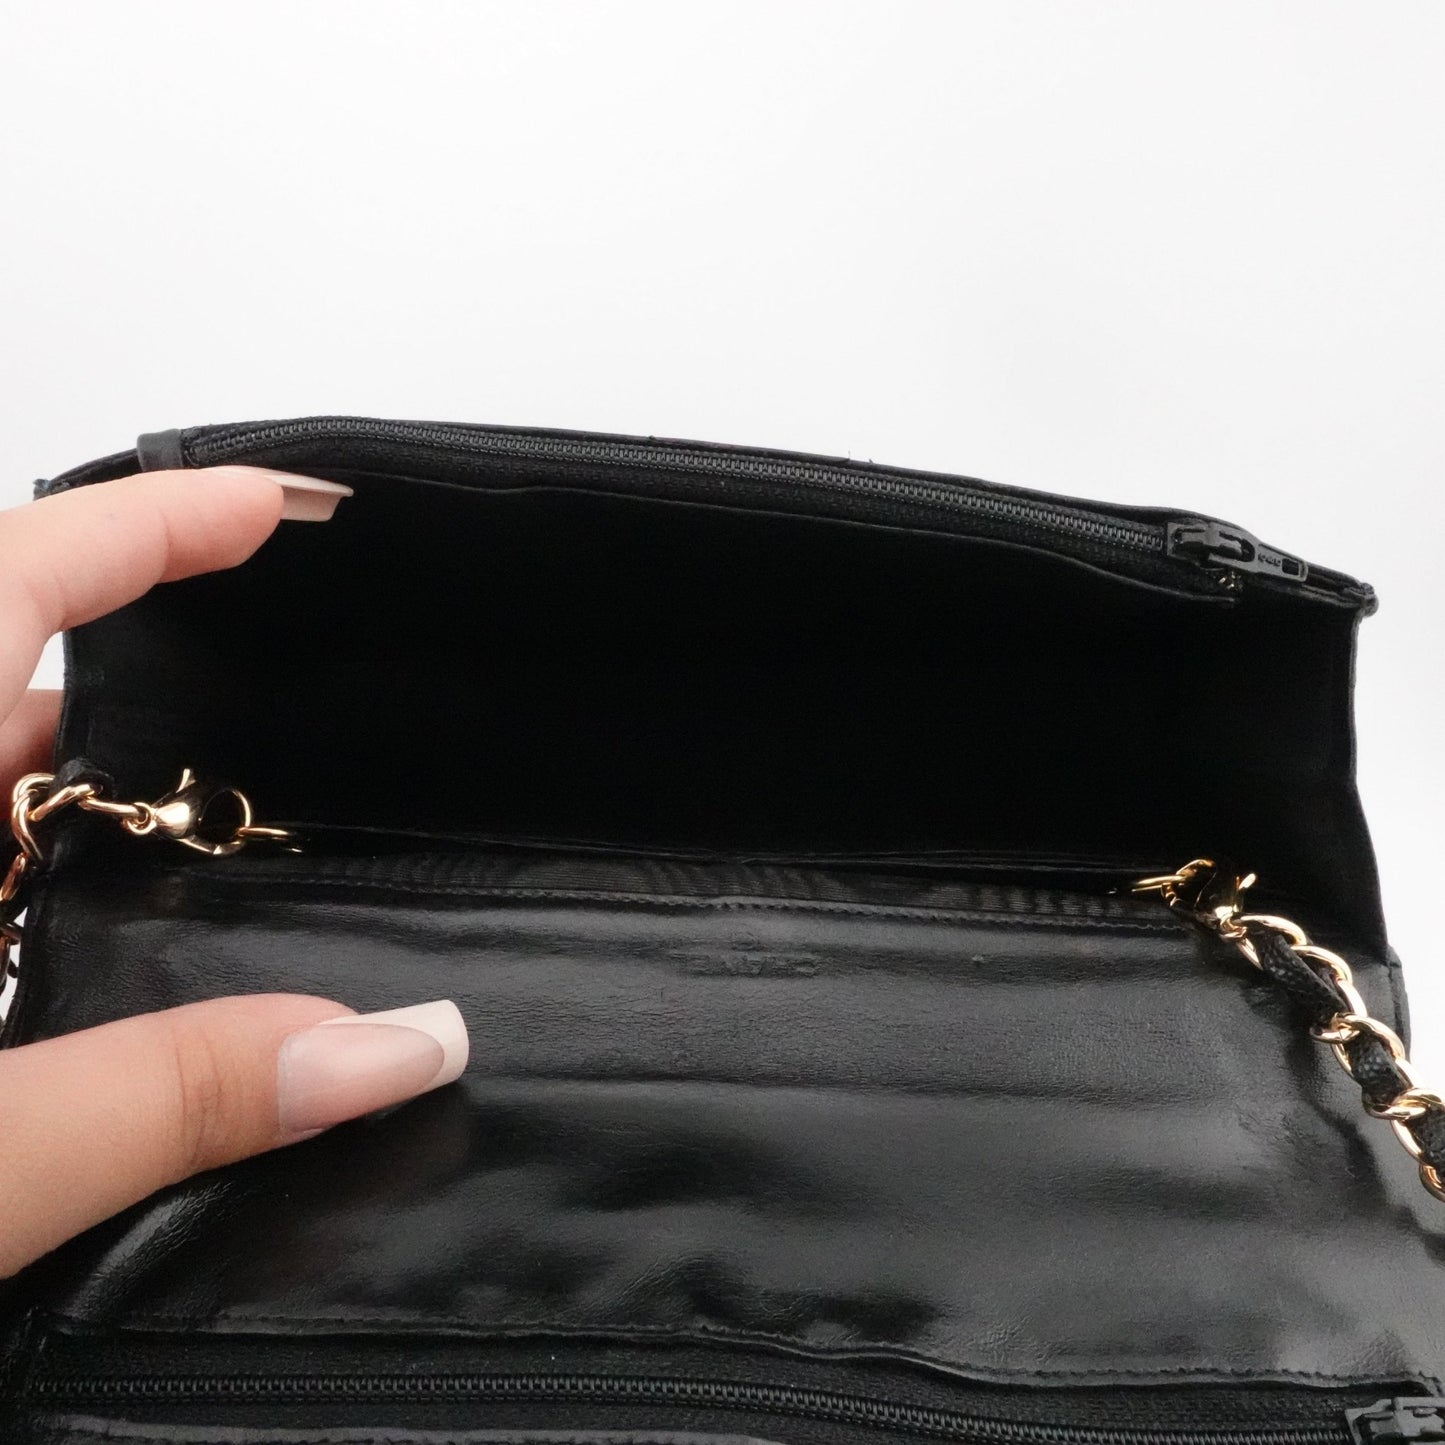 CHANEL Caviar Timeless Clutch on Chain - Bag Envy